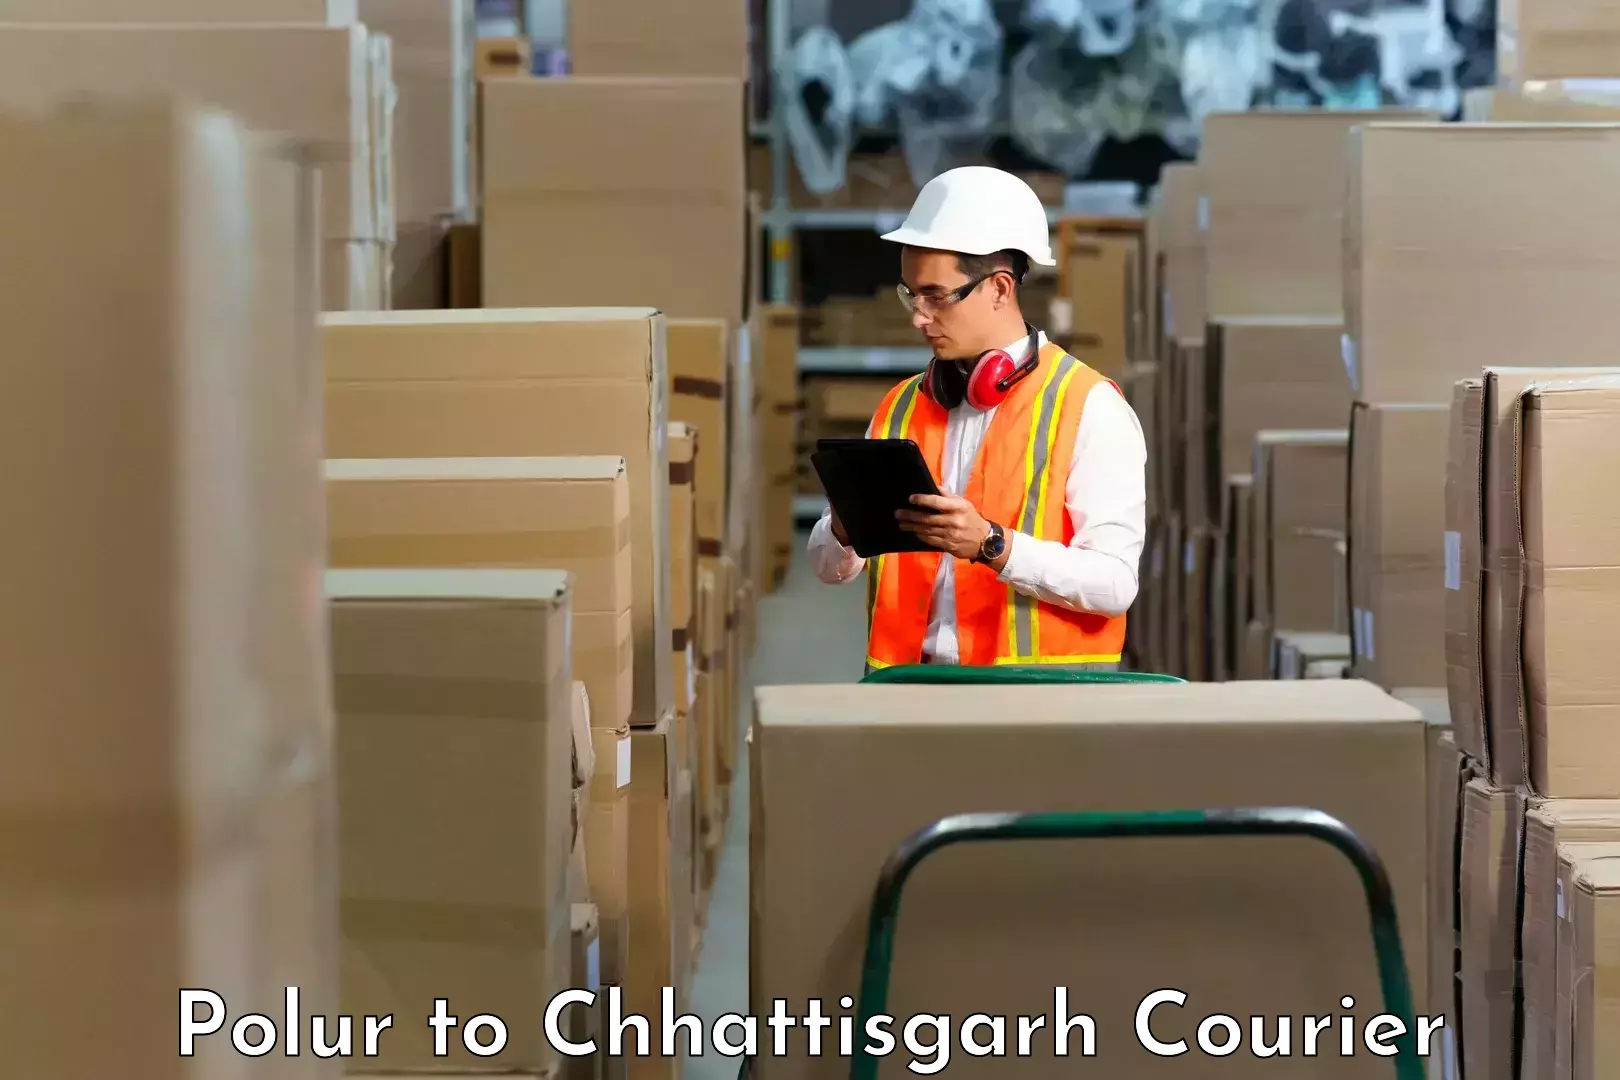 Parcel service for businesses Polur to Raigarh Chhattisgarh